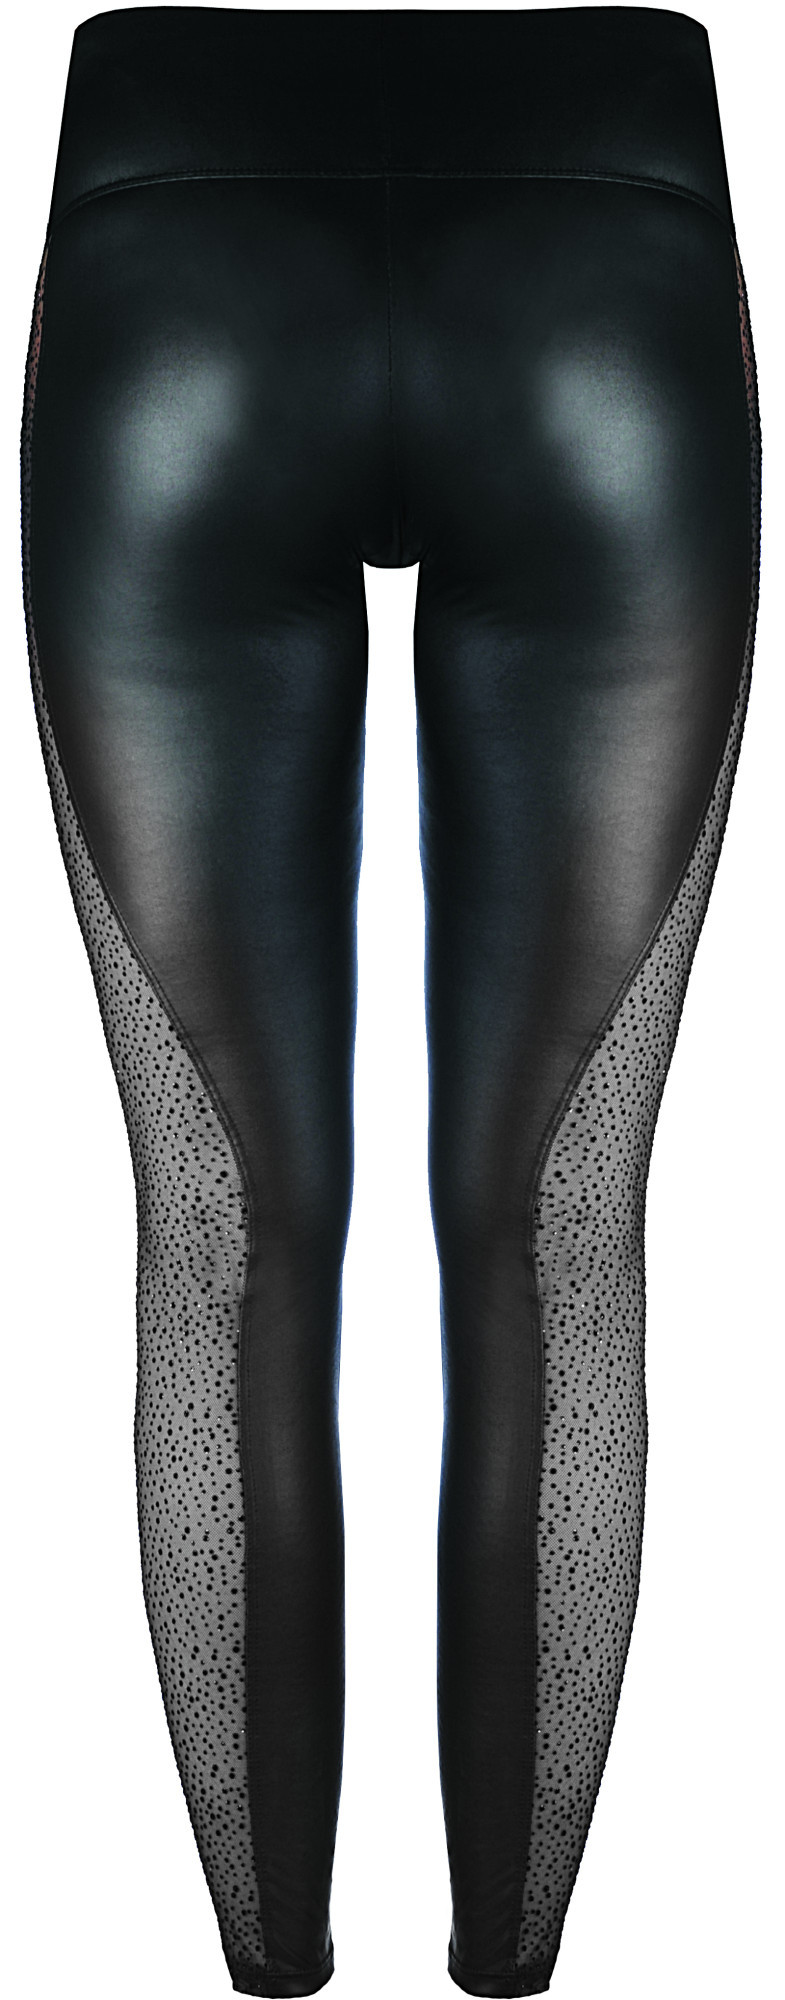 Kalhoty V-9226 černé - Axami S